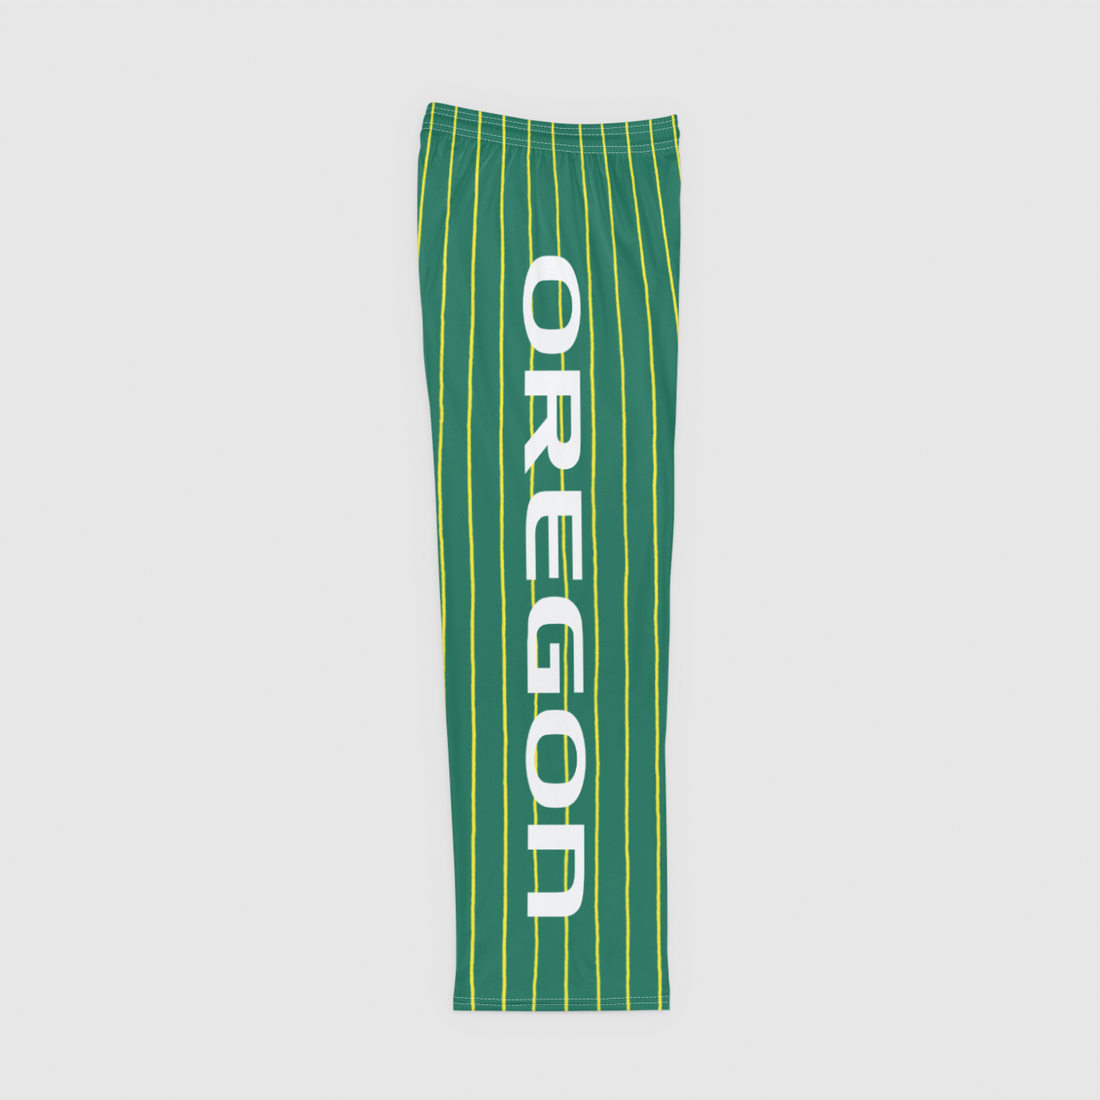 Oregon Pajama Pant